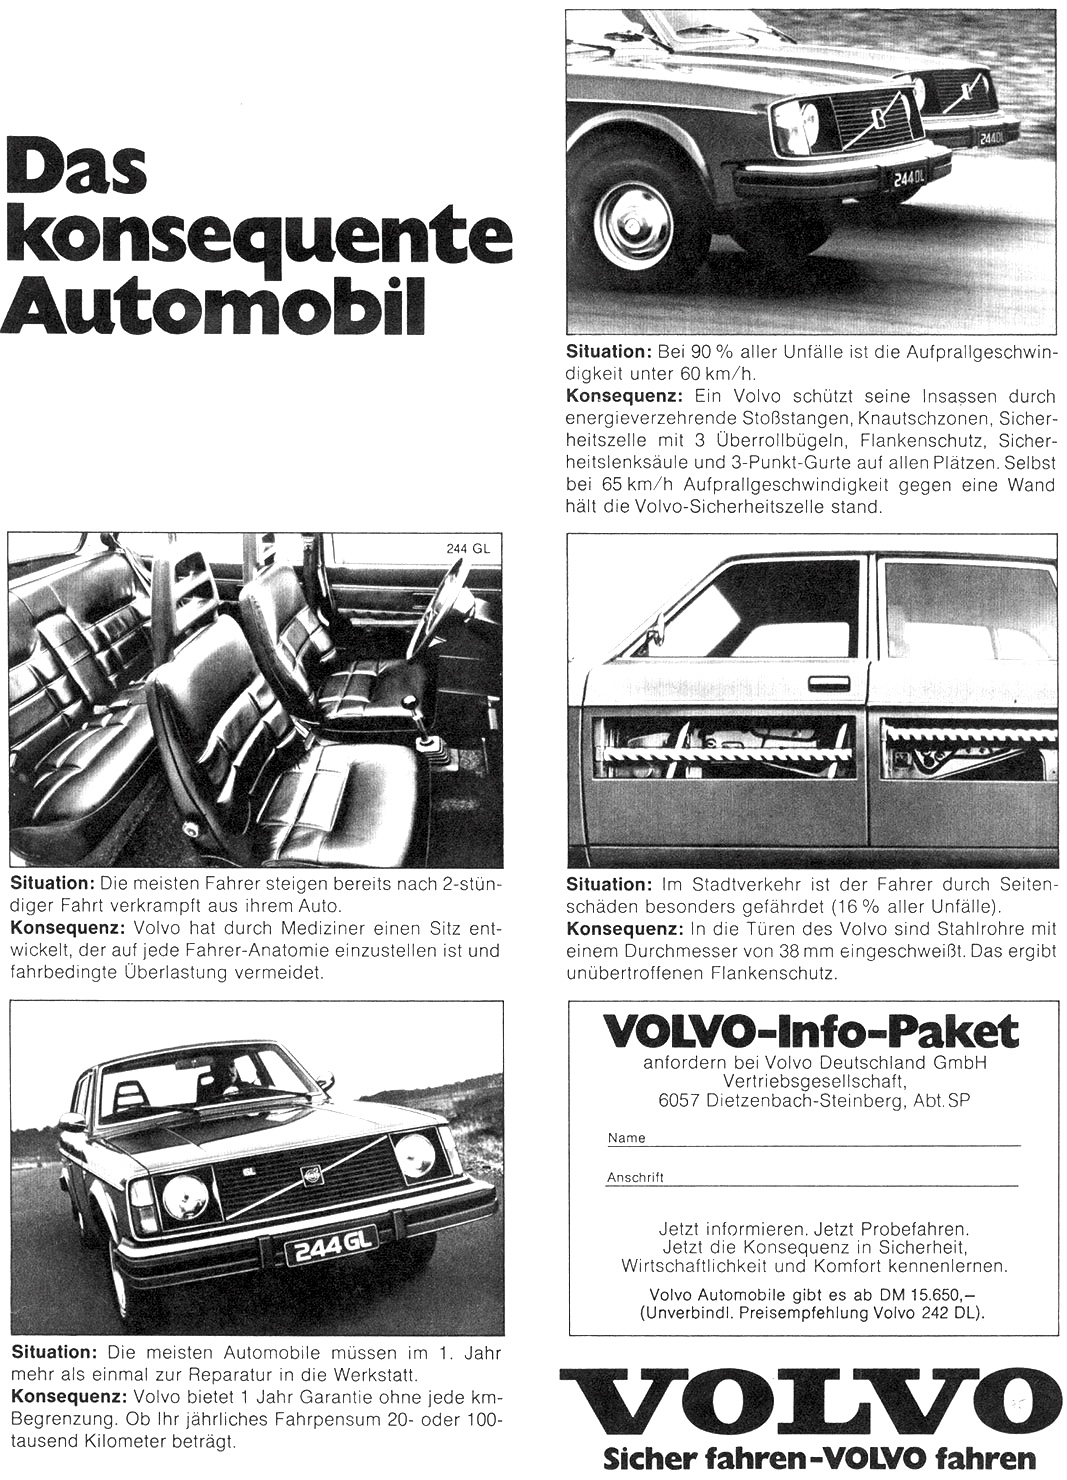 1976 Volvo 240 Series